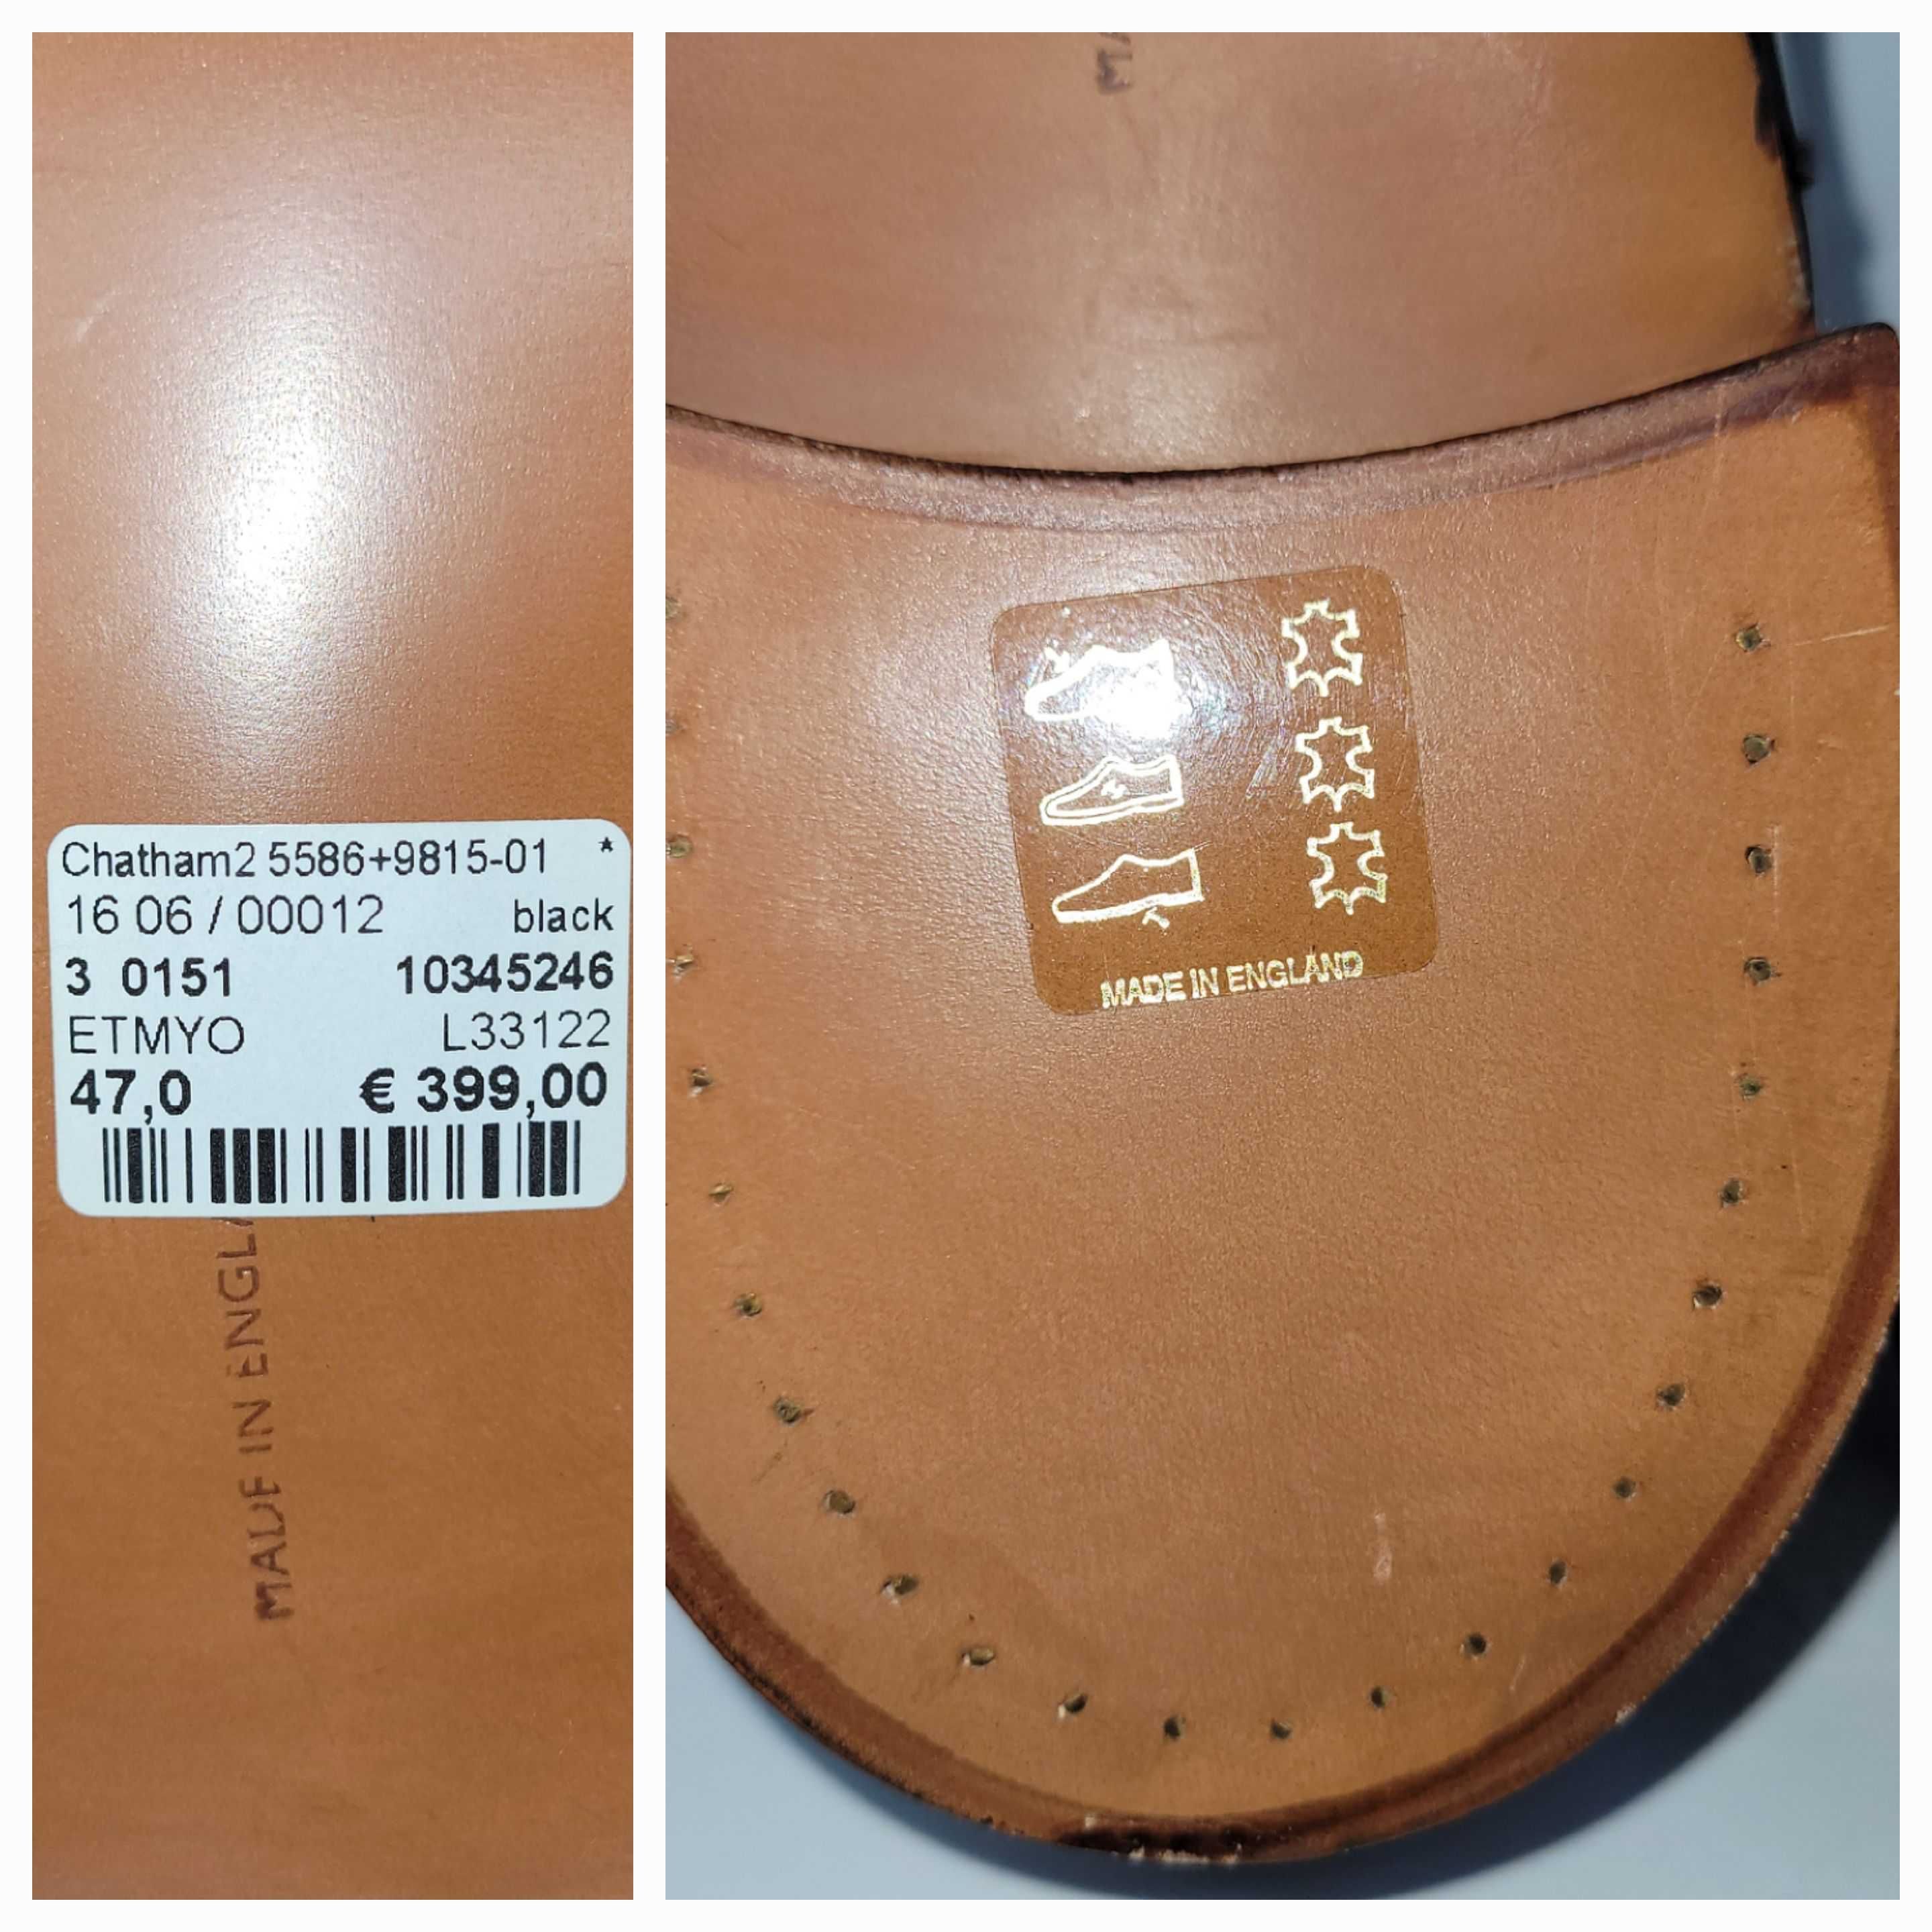 Crockett & Jones, Chatham 2, Black Patent Leather, Leather Sole,UK 13E